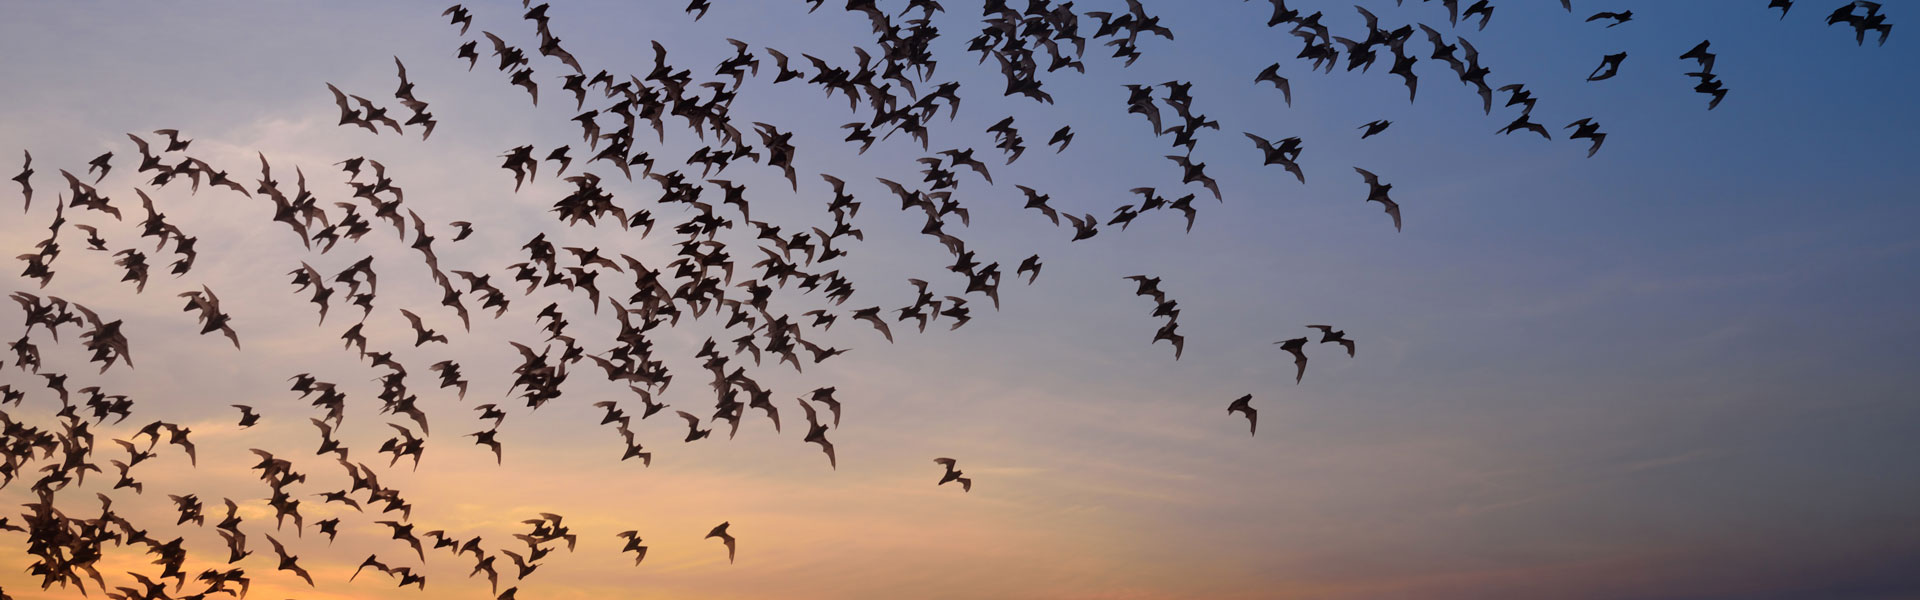 Colony of bats migrating